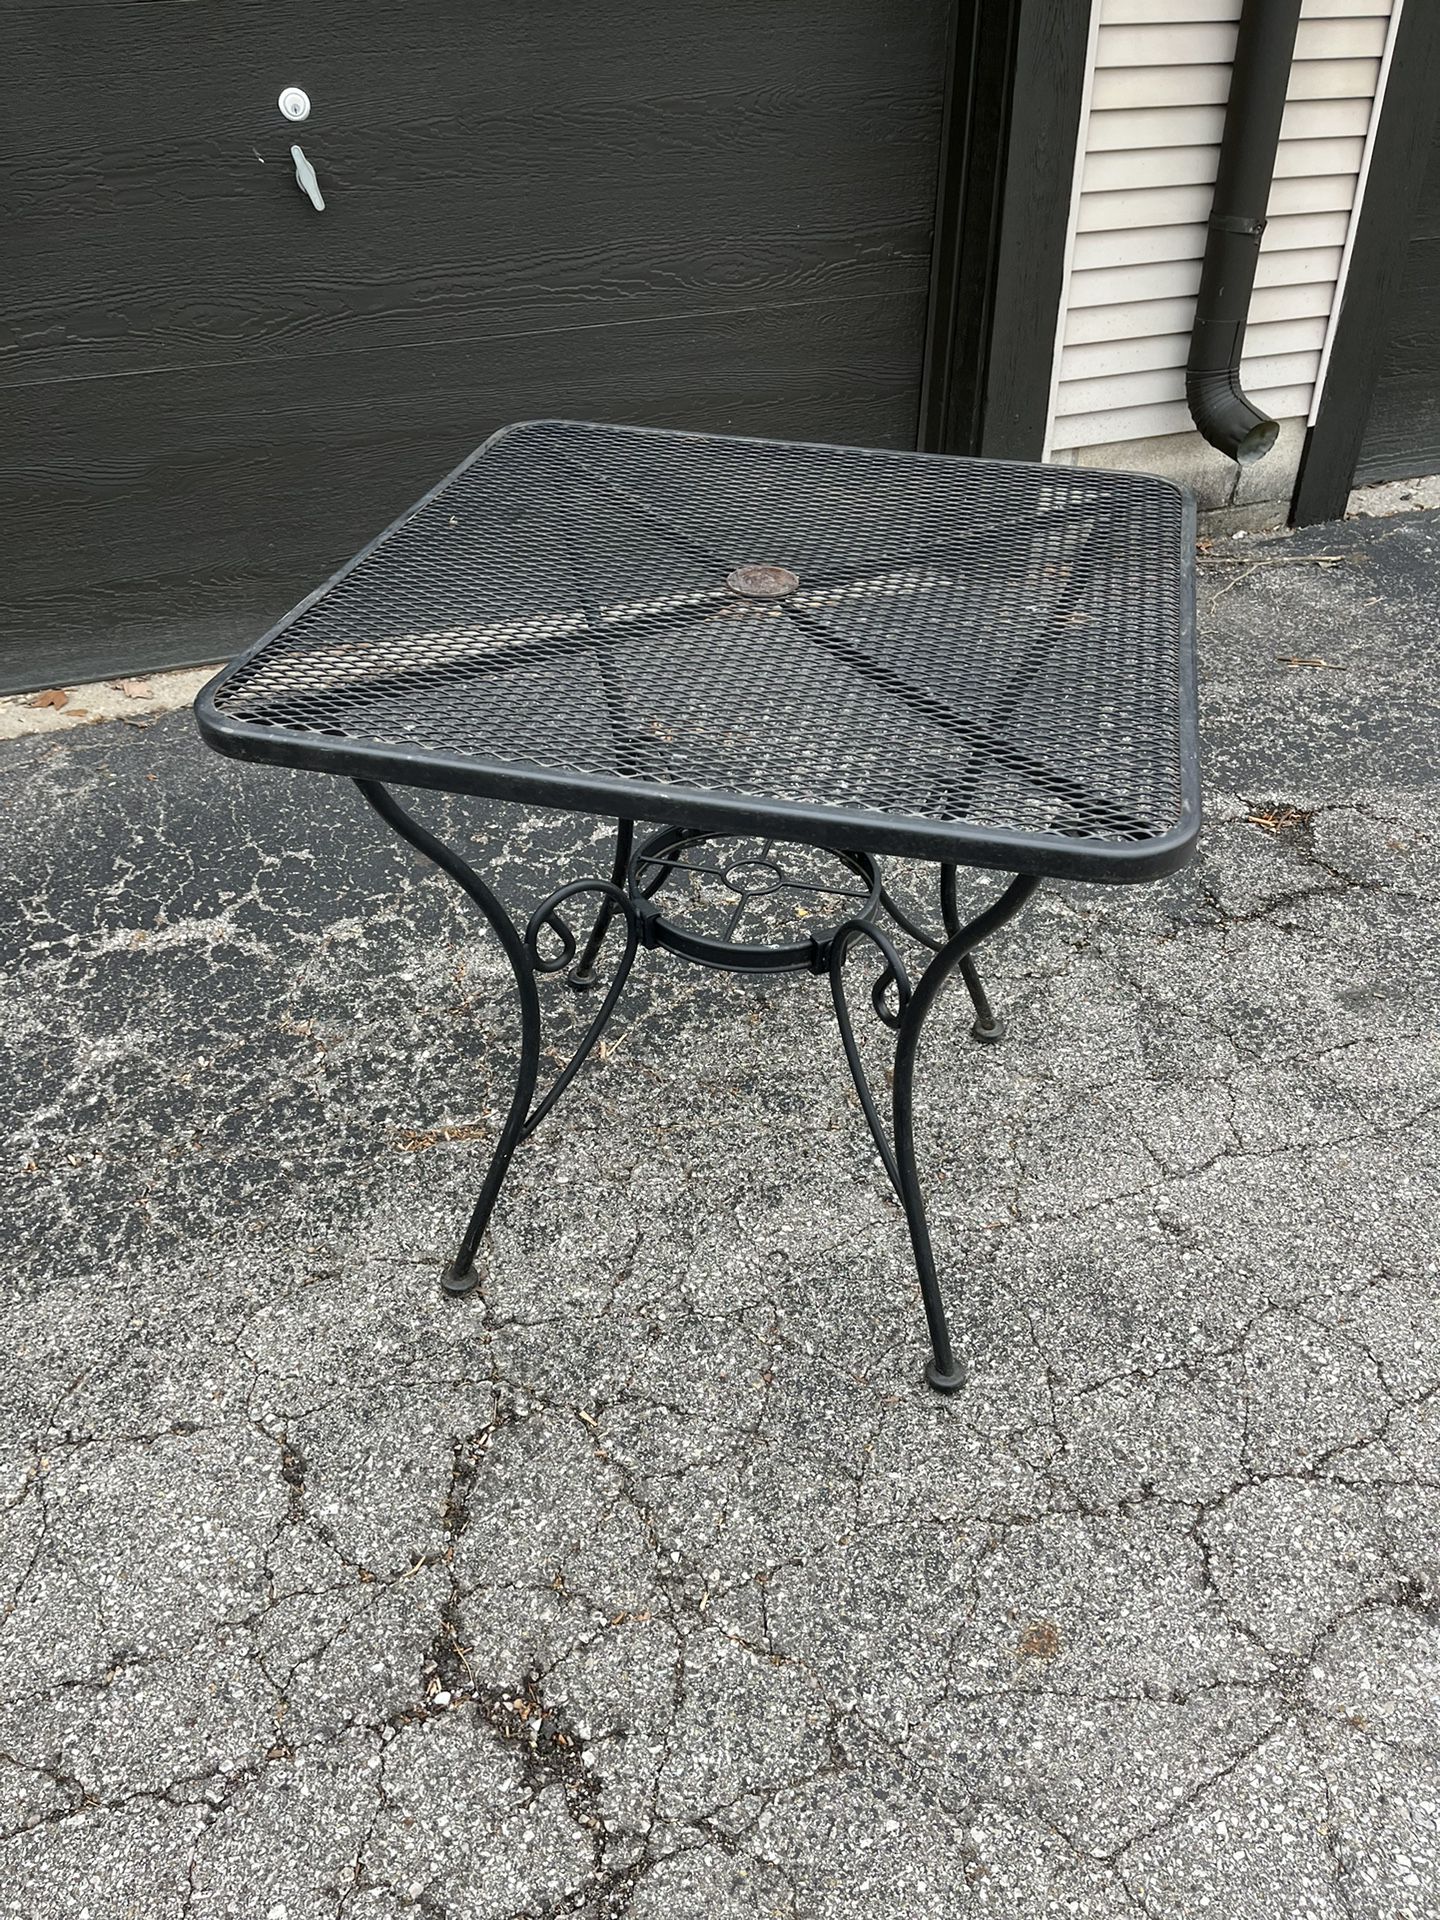 30” X 30” Outdoor Patio Table. 